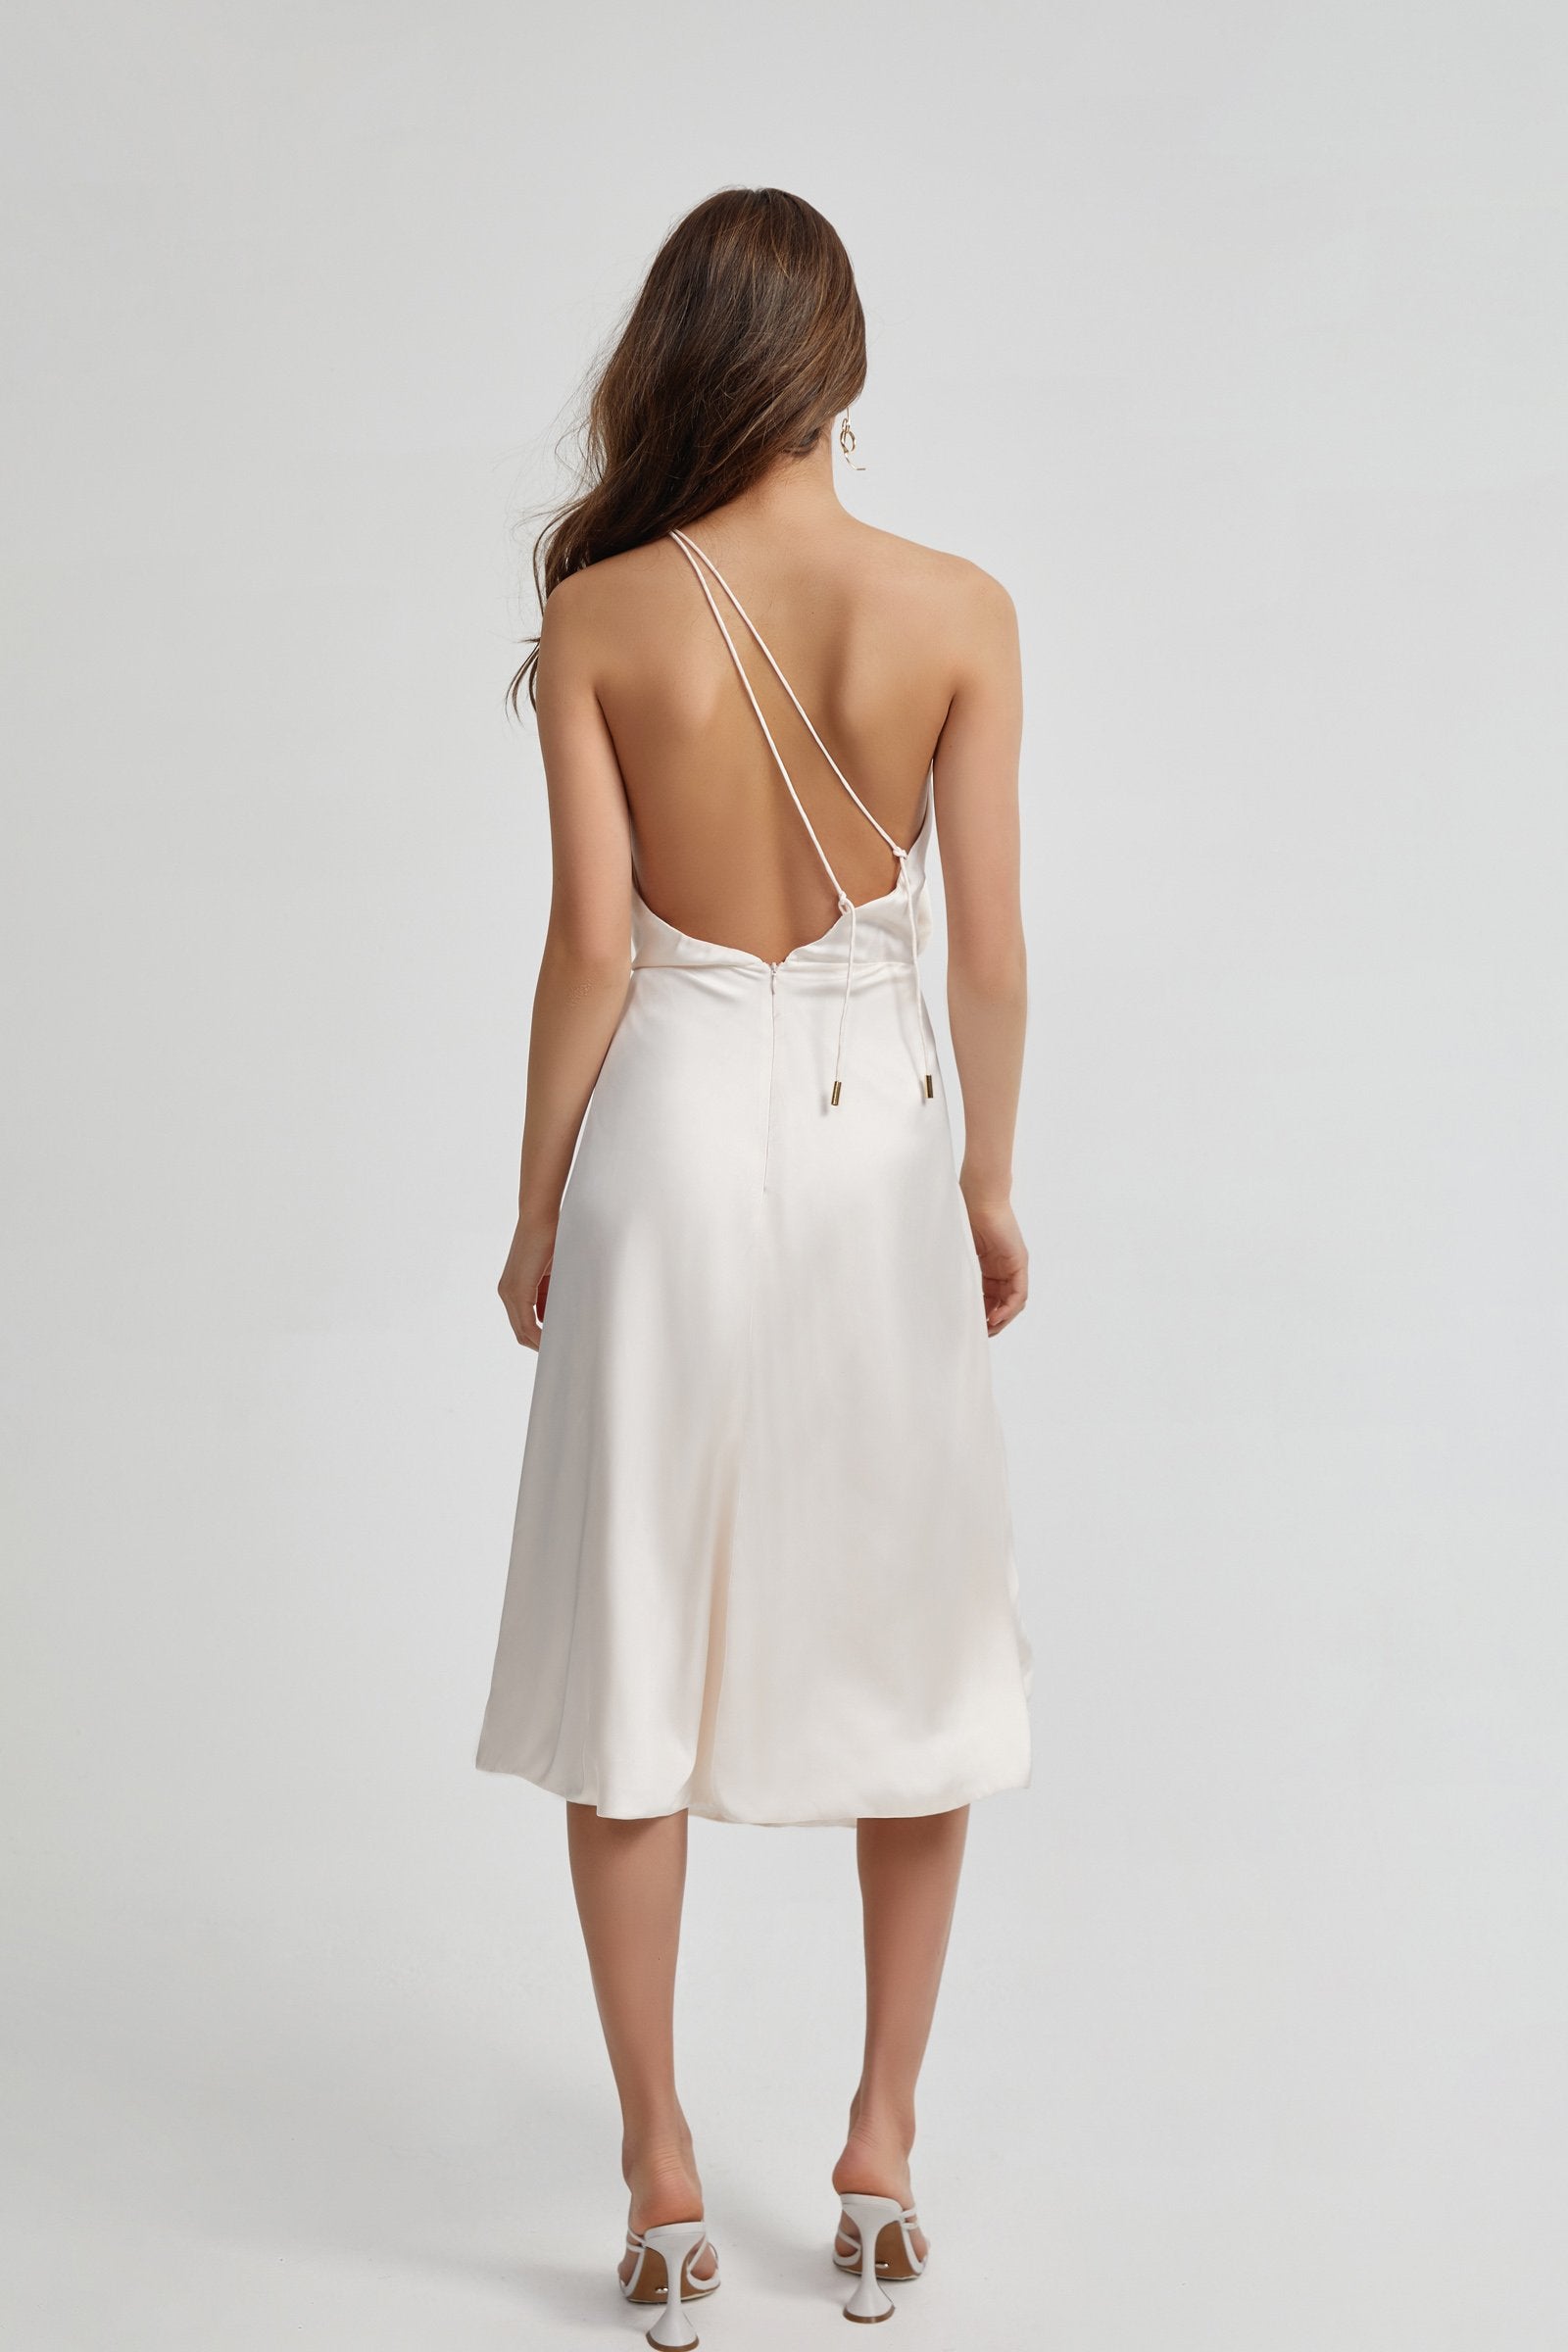 Lexi Clothing Frankie Dress | Lexi Dresses